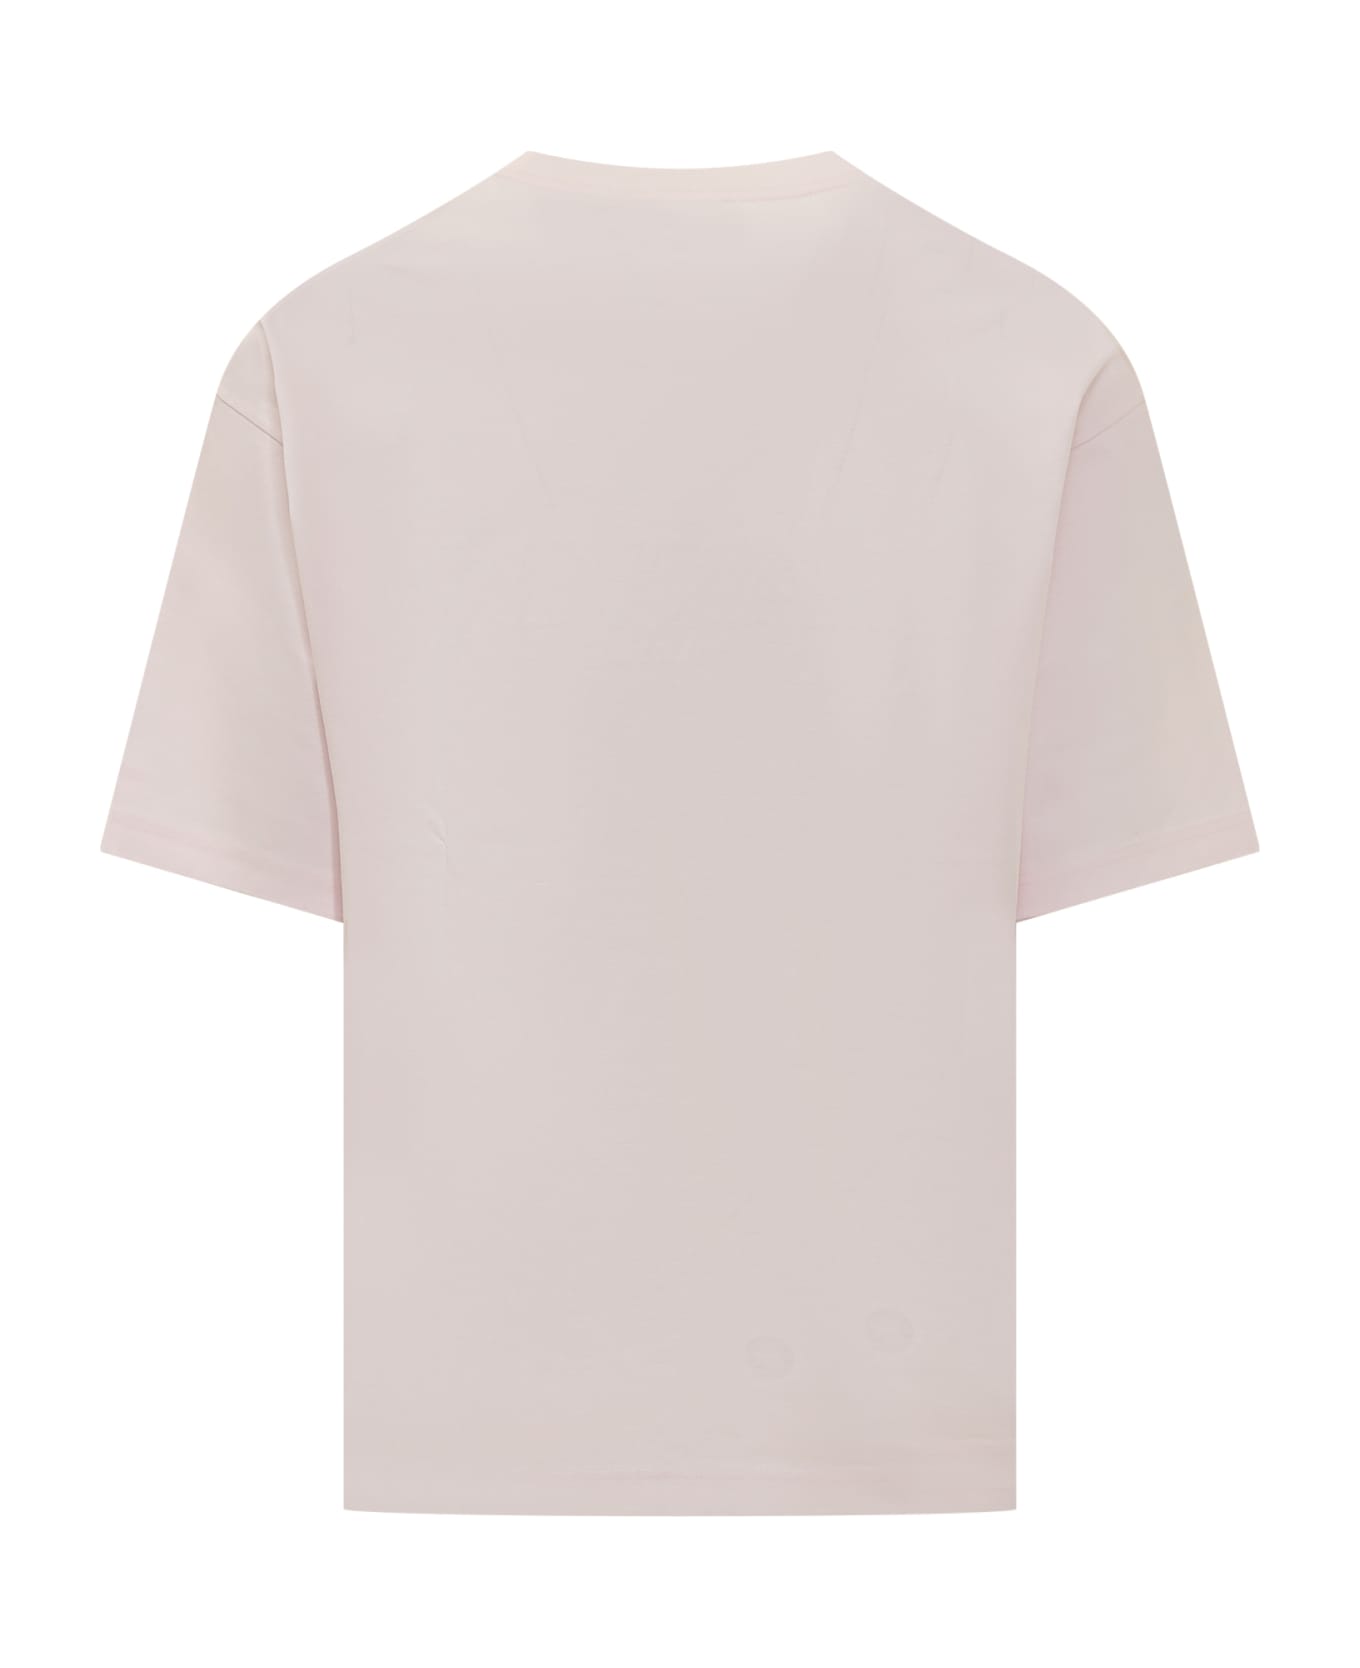 Lanvin Pink Cotton T-shirt - Pink シャツ